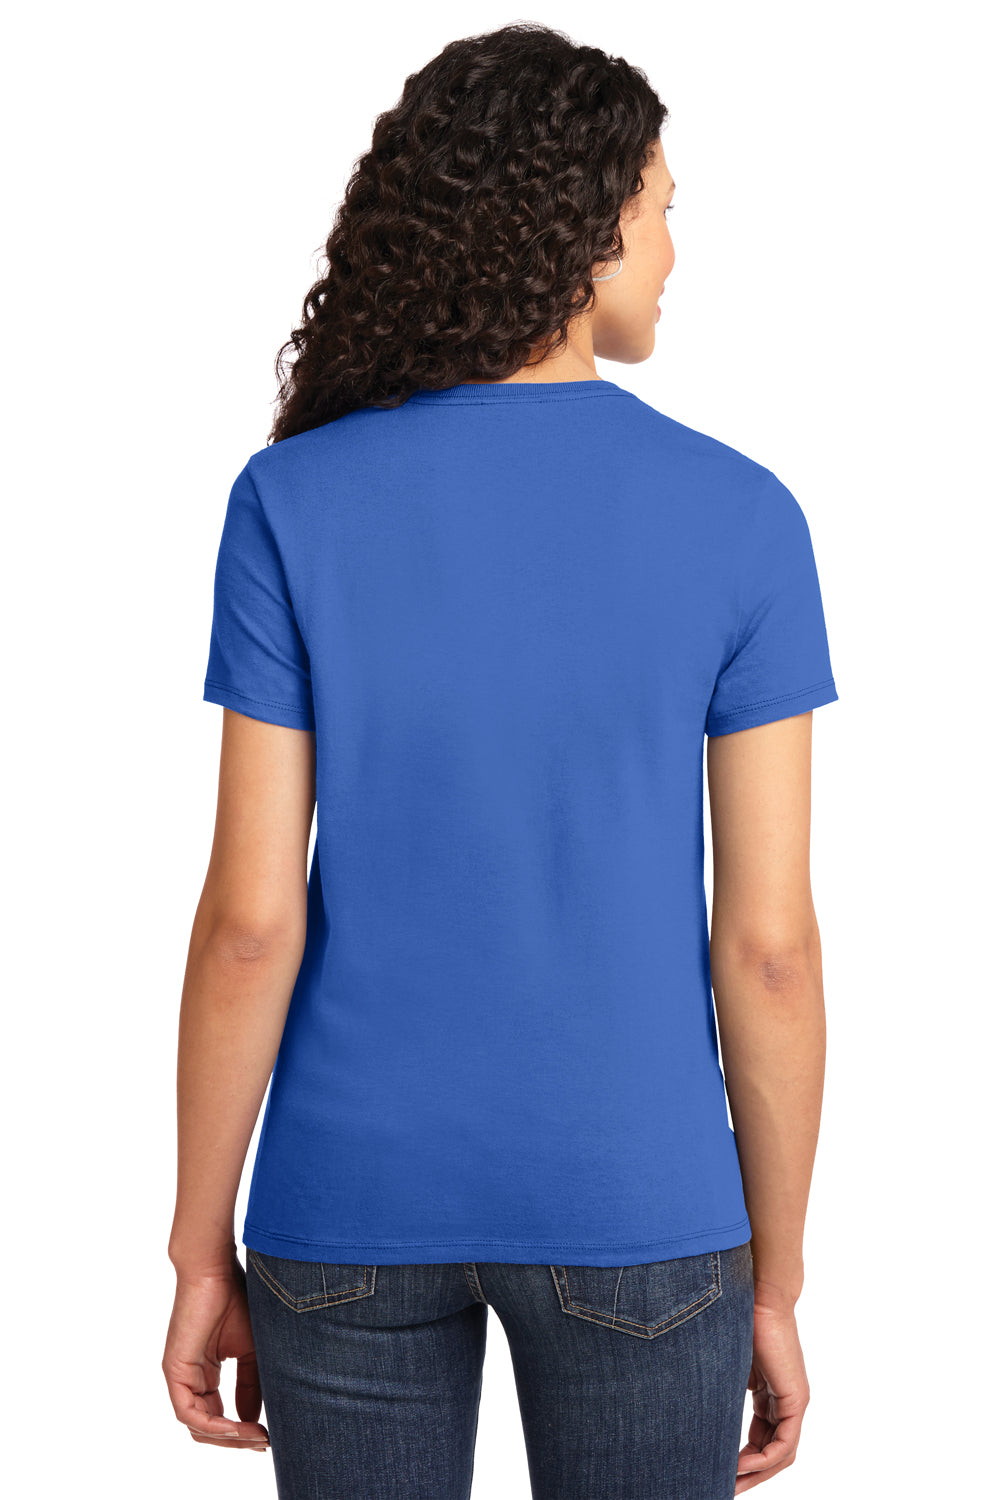 Port & Company LPC61 Womens Essential Short Sleeve Crewneck T-Shirt Royal Blue Back